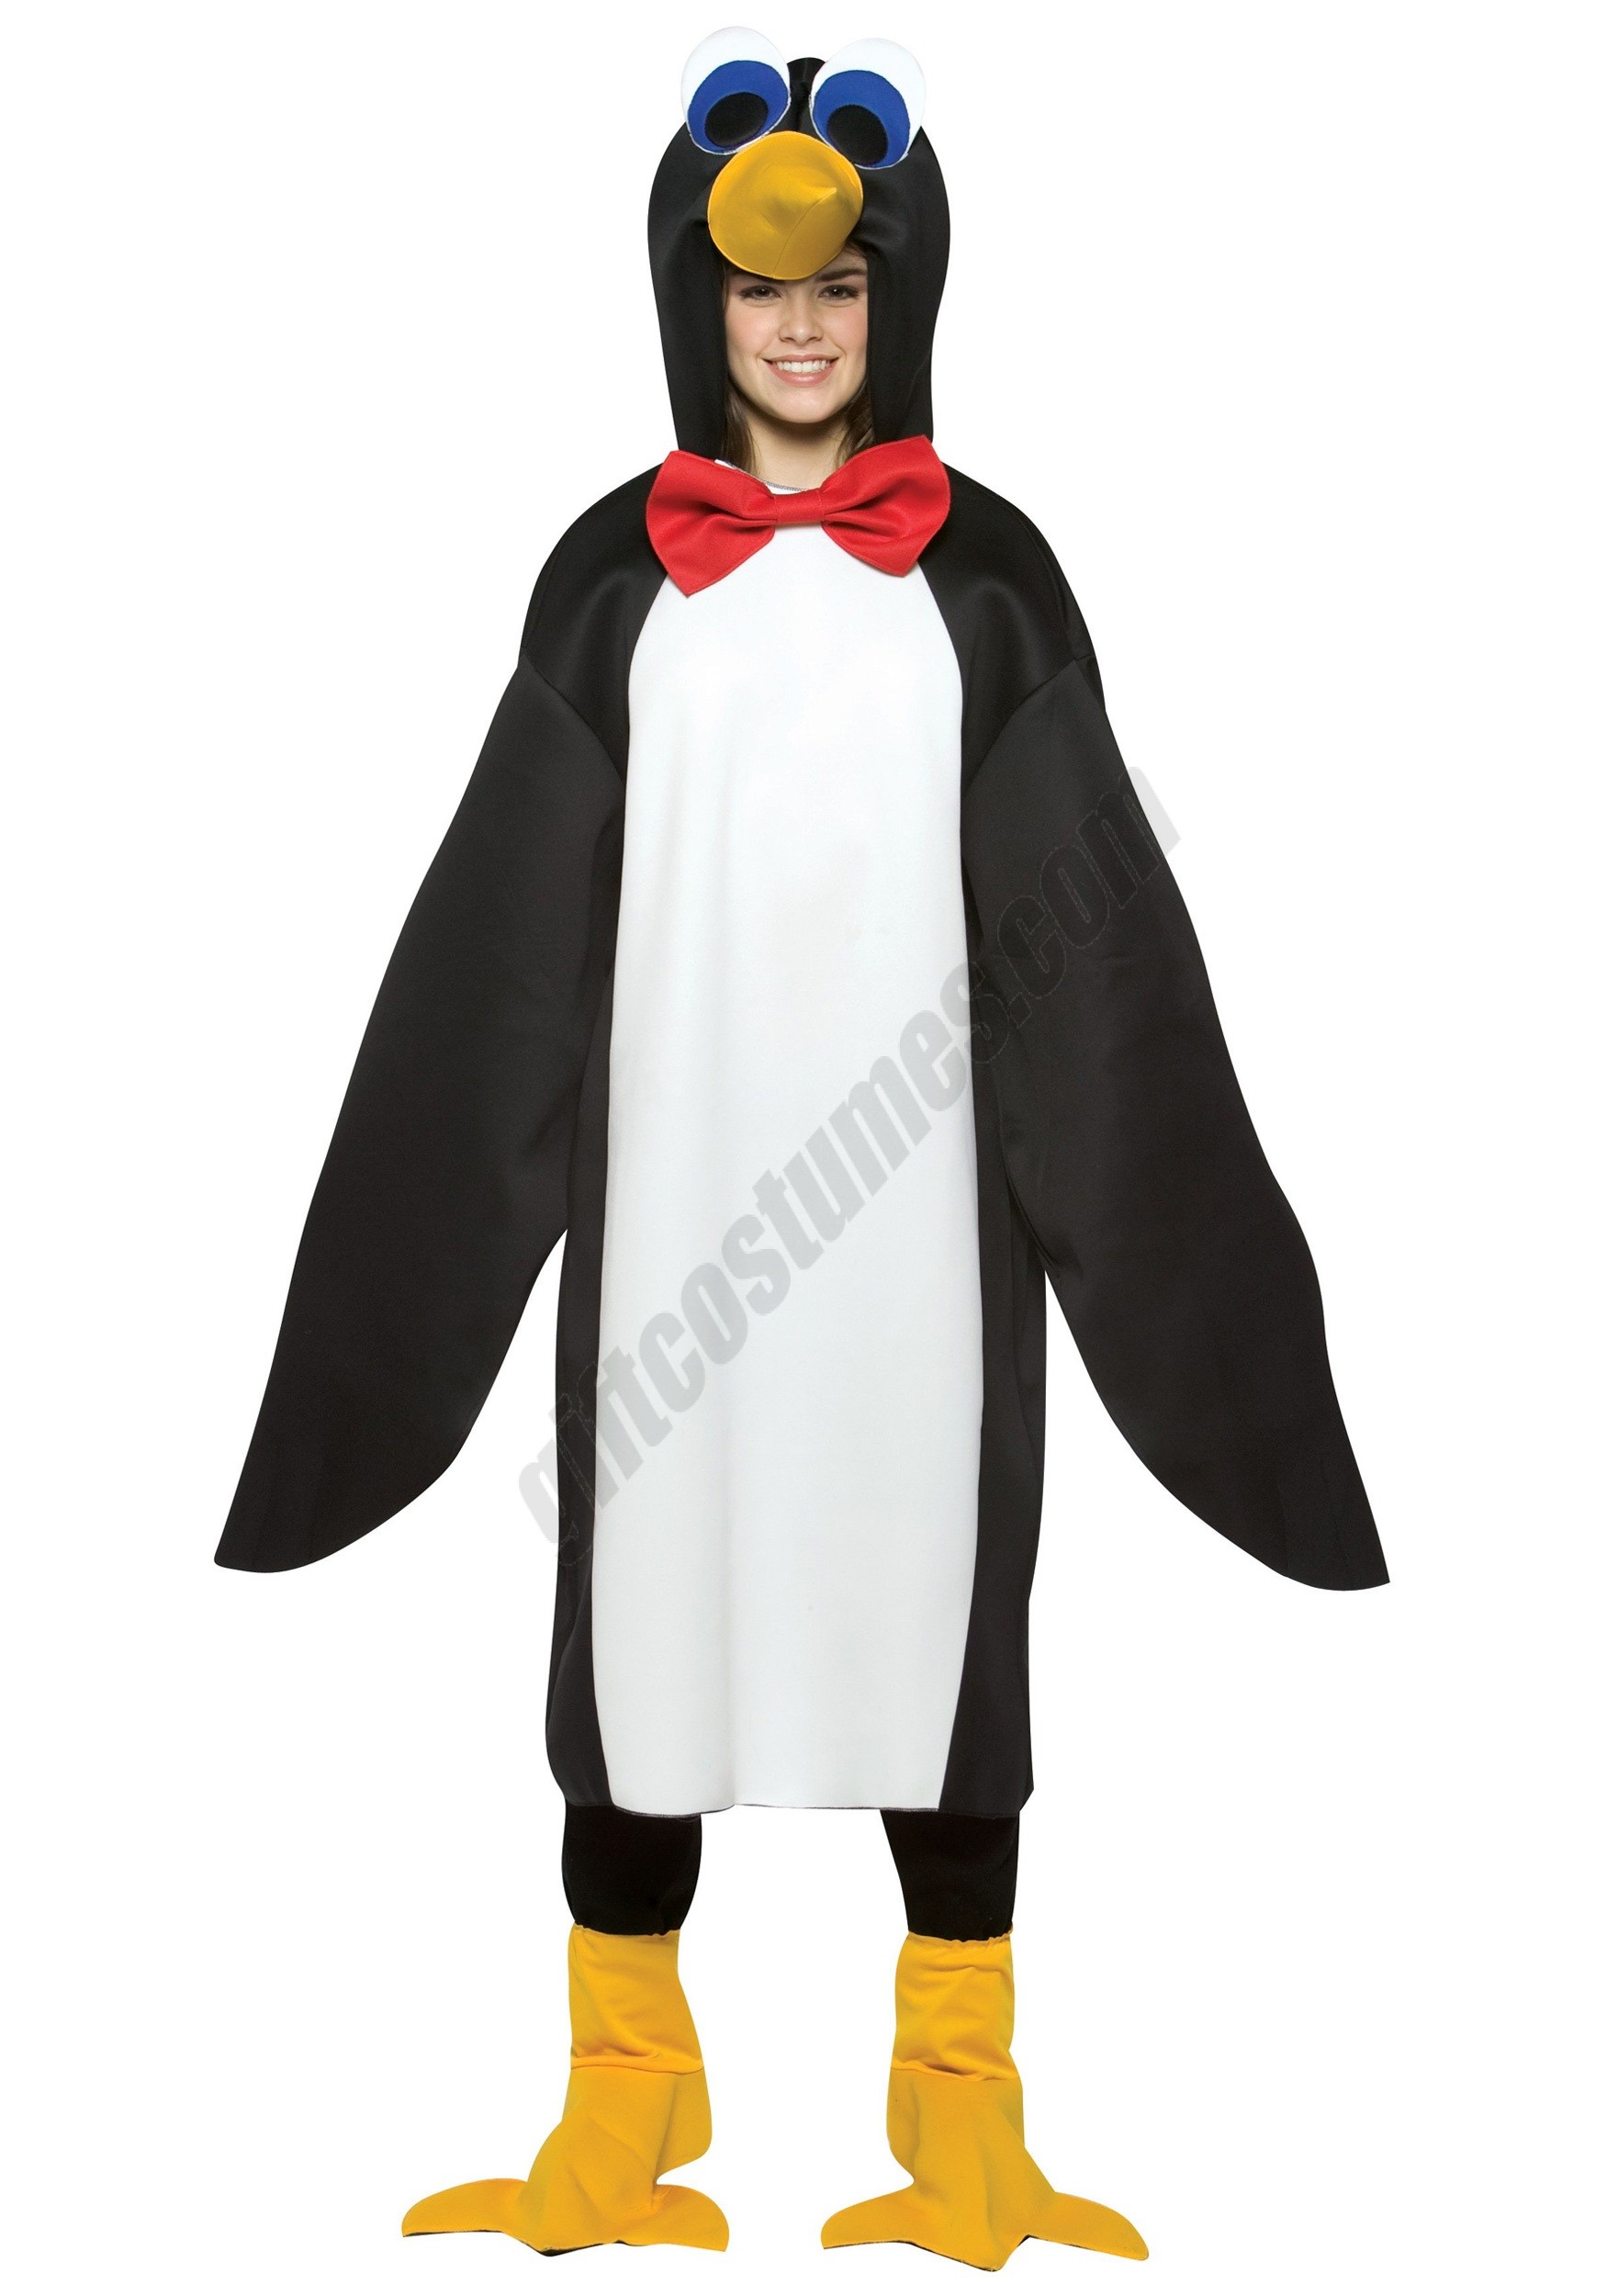 Teen Penguin Costume Promotions - Teen Penguin Costume Promotions